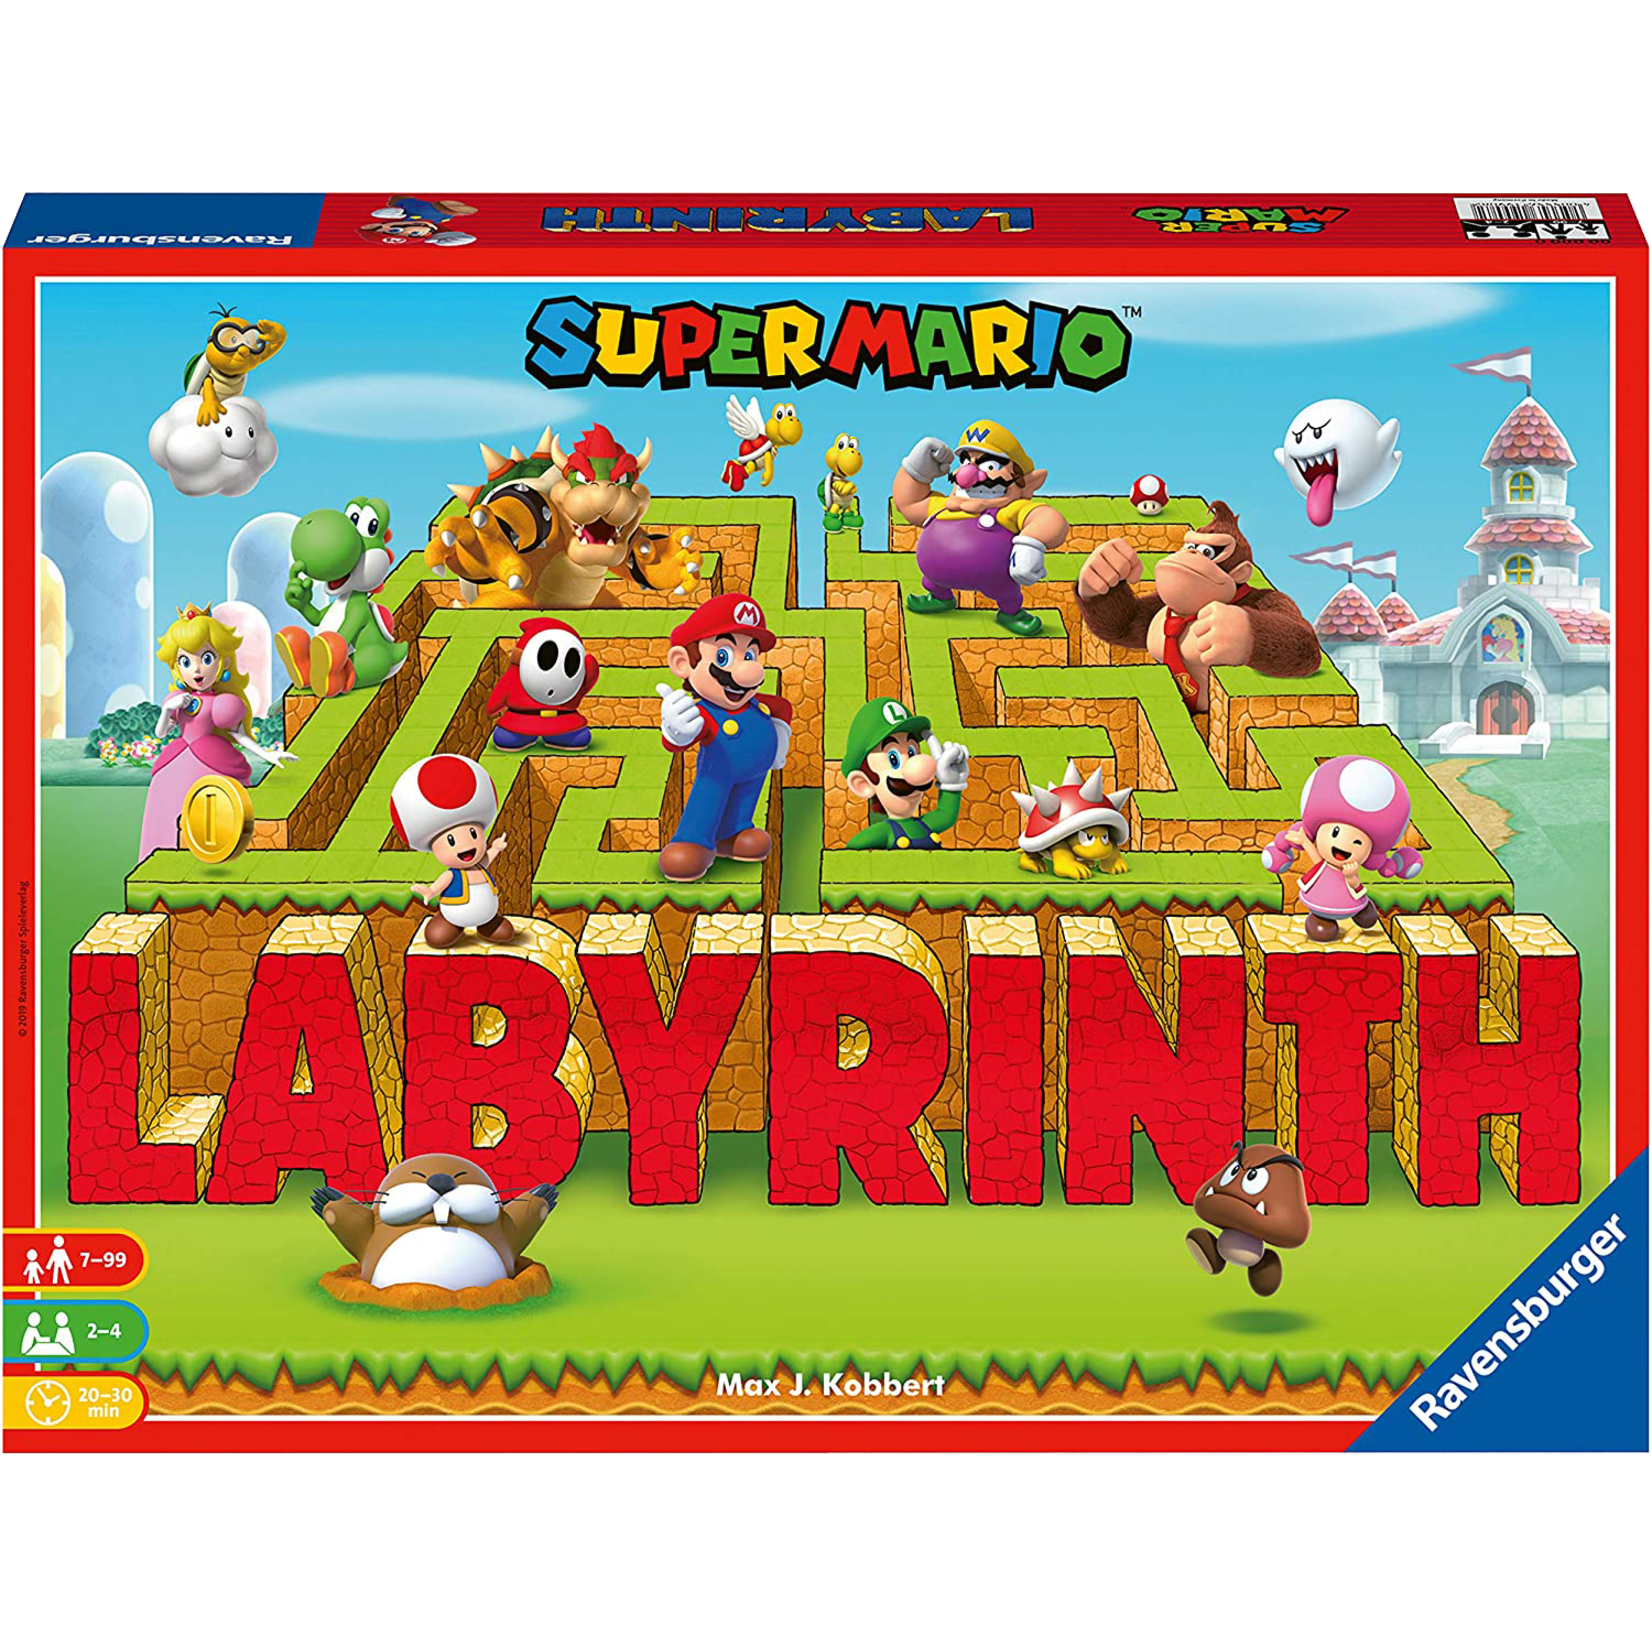 Ravensburger Labyrinth: Super Mario